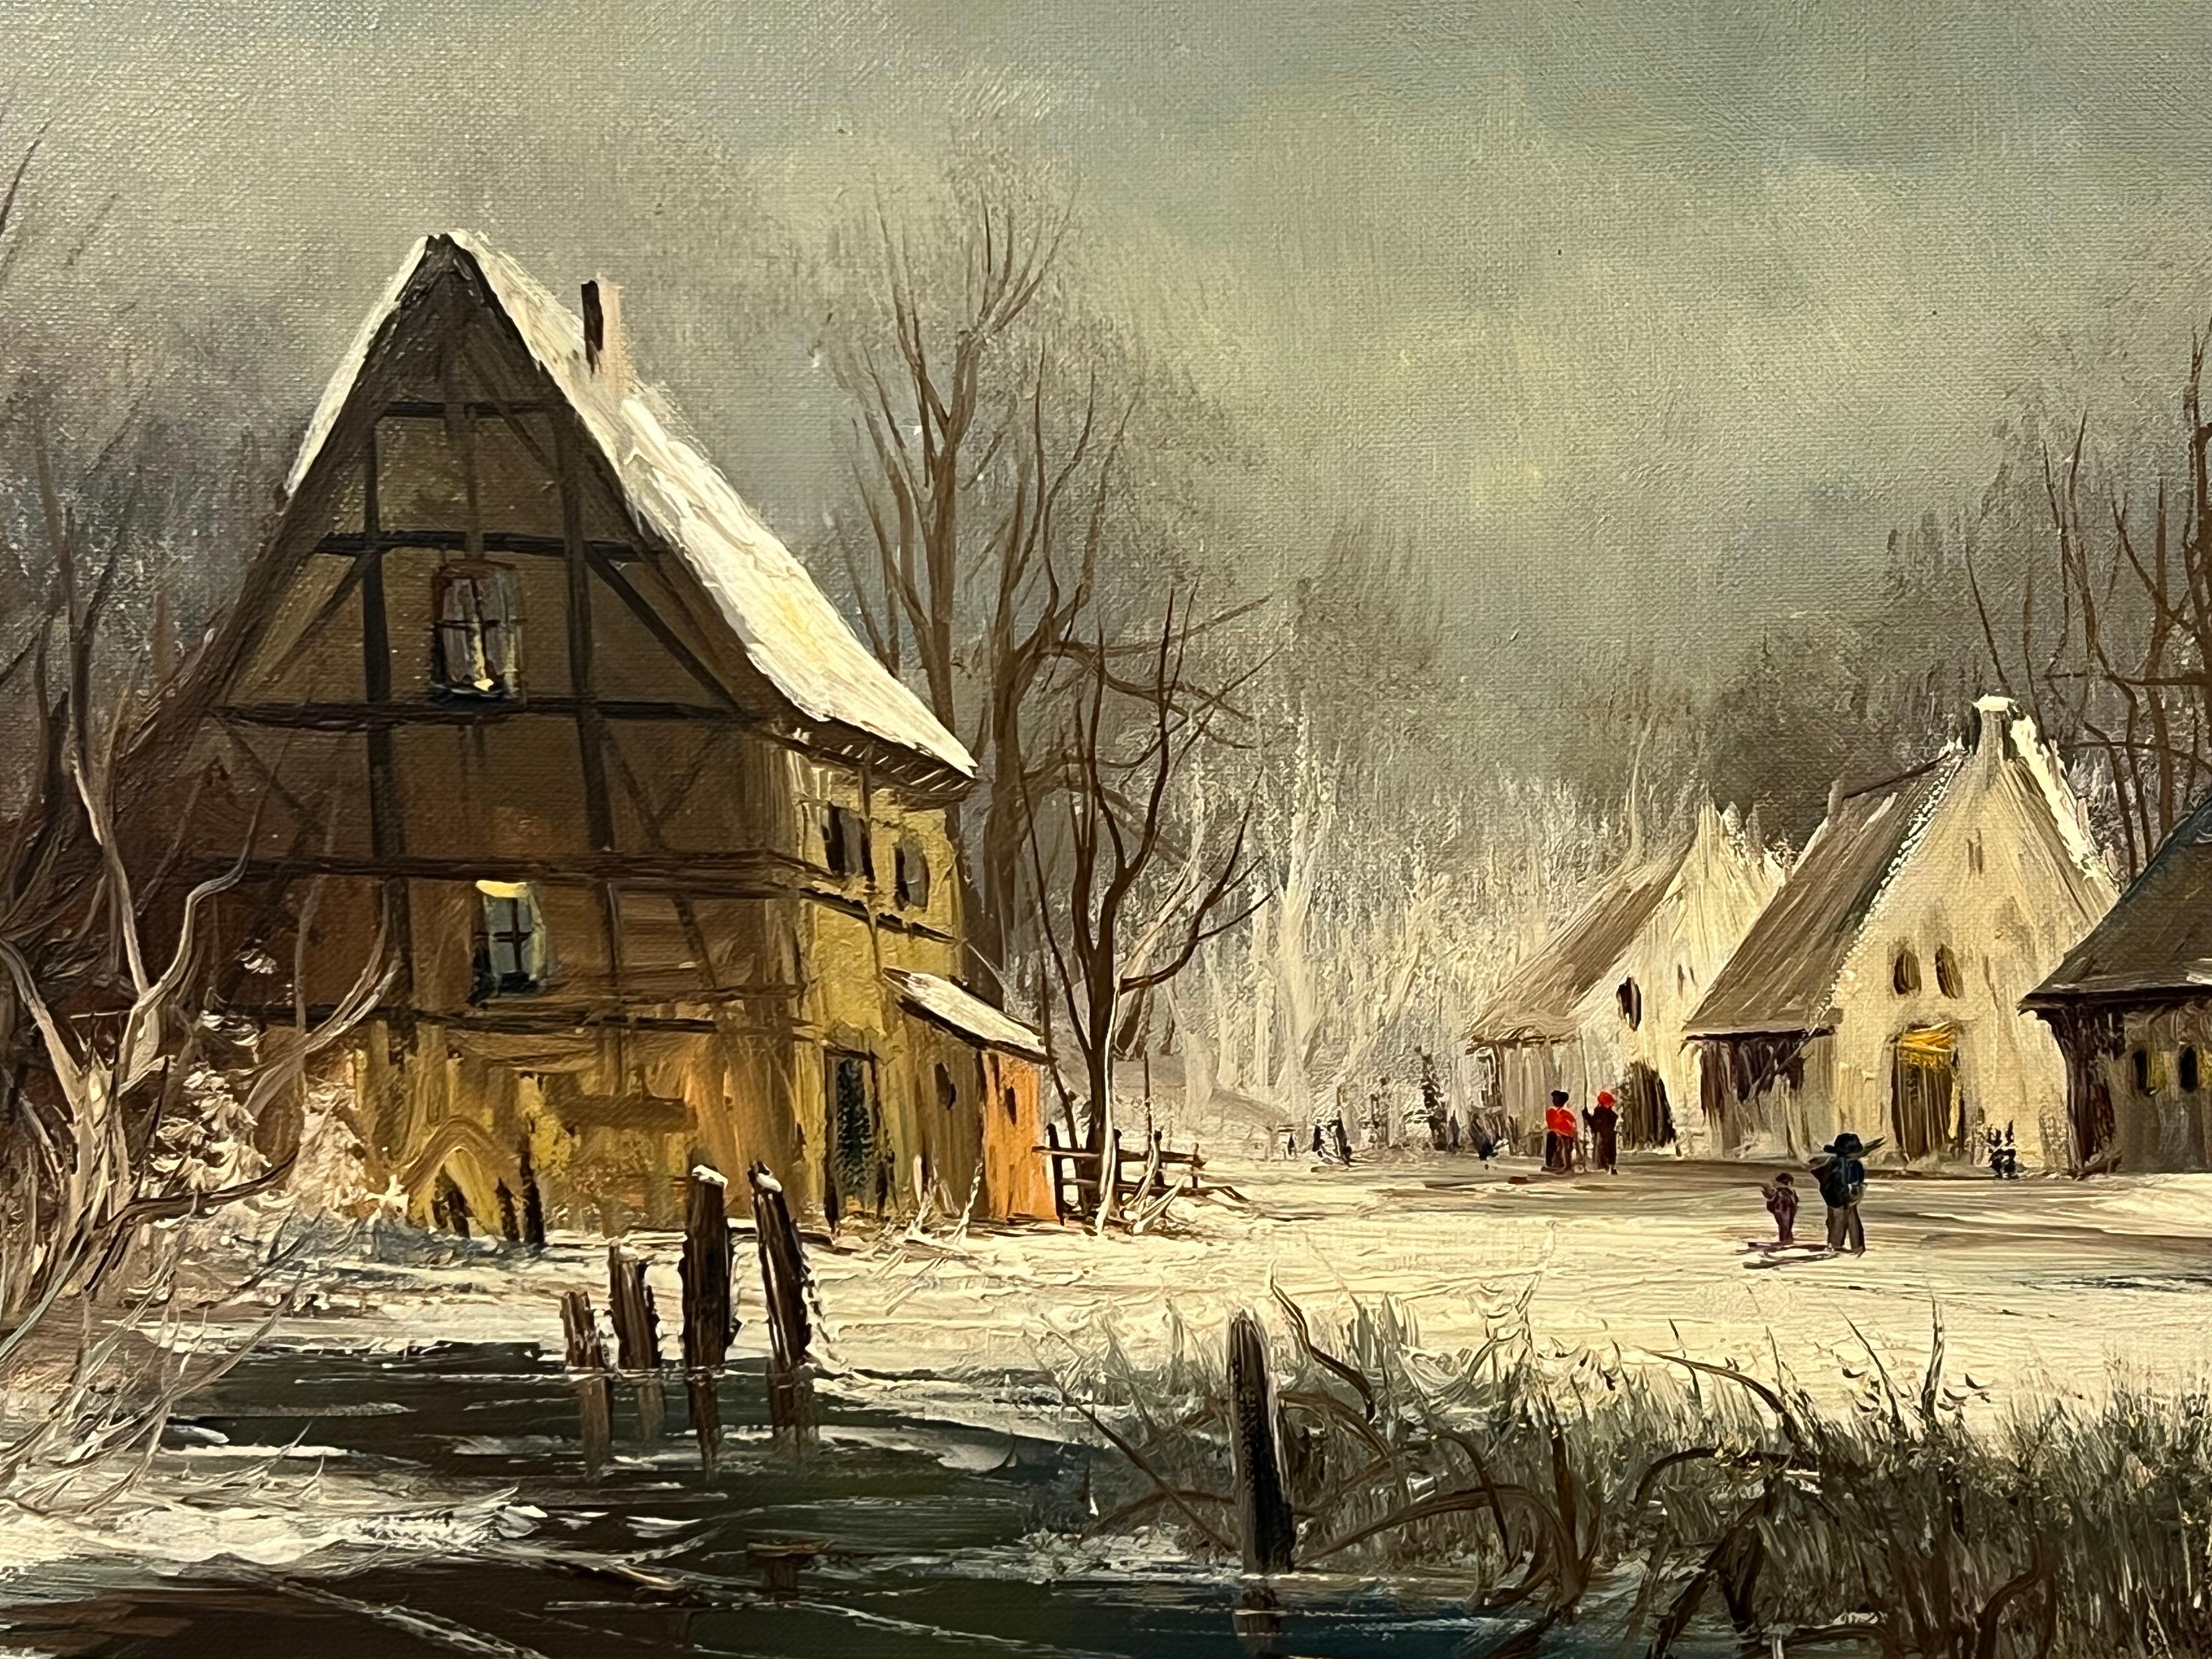 European Village in Winter Snow with Figures & Frozen Pond by German Artist For Sale 6